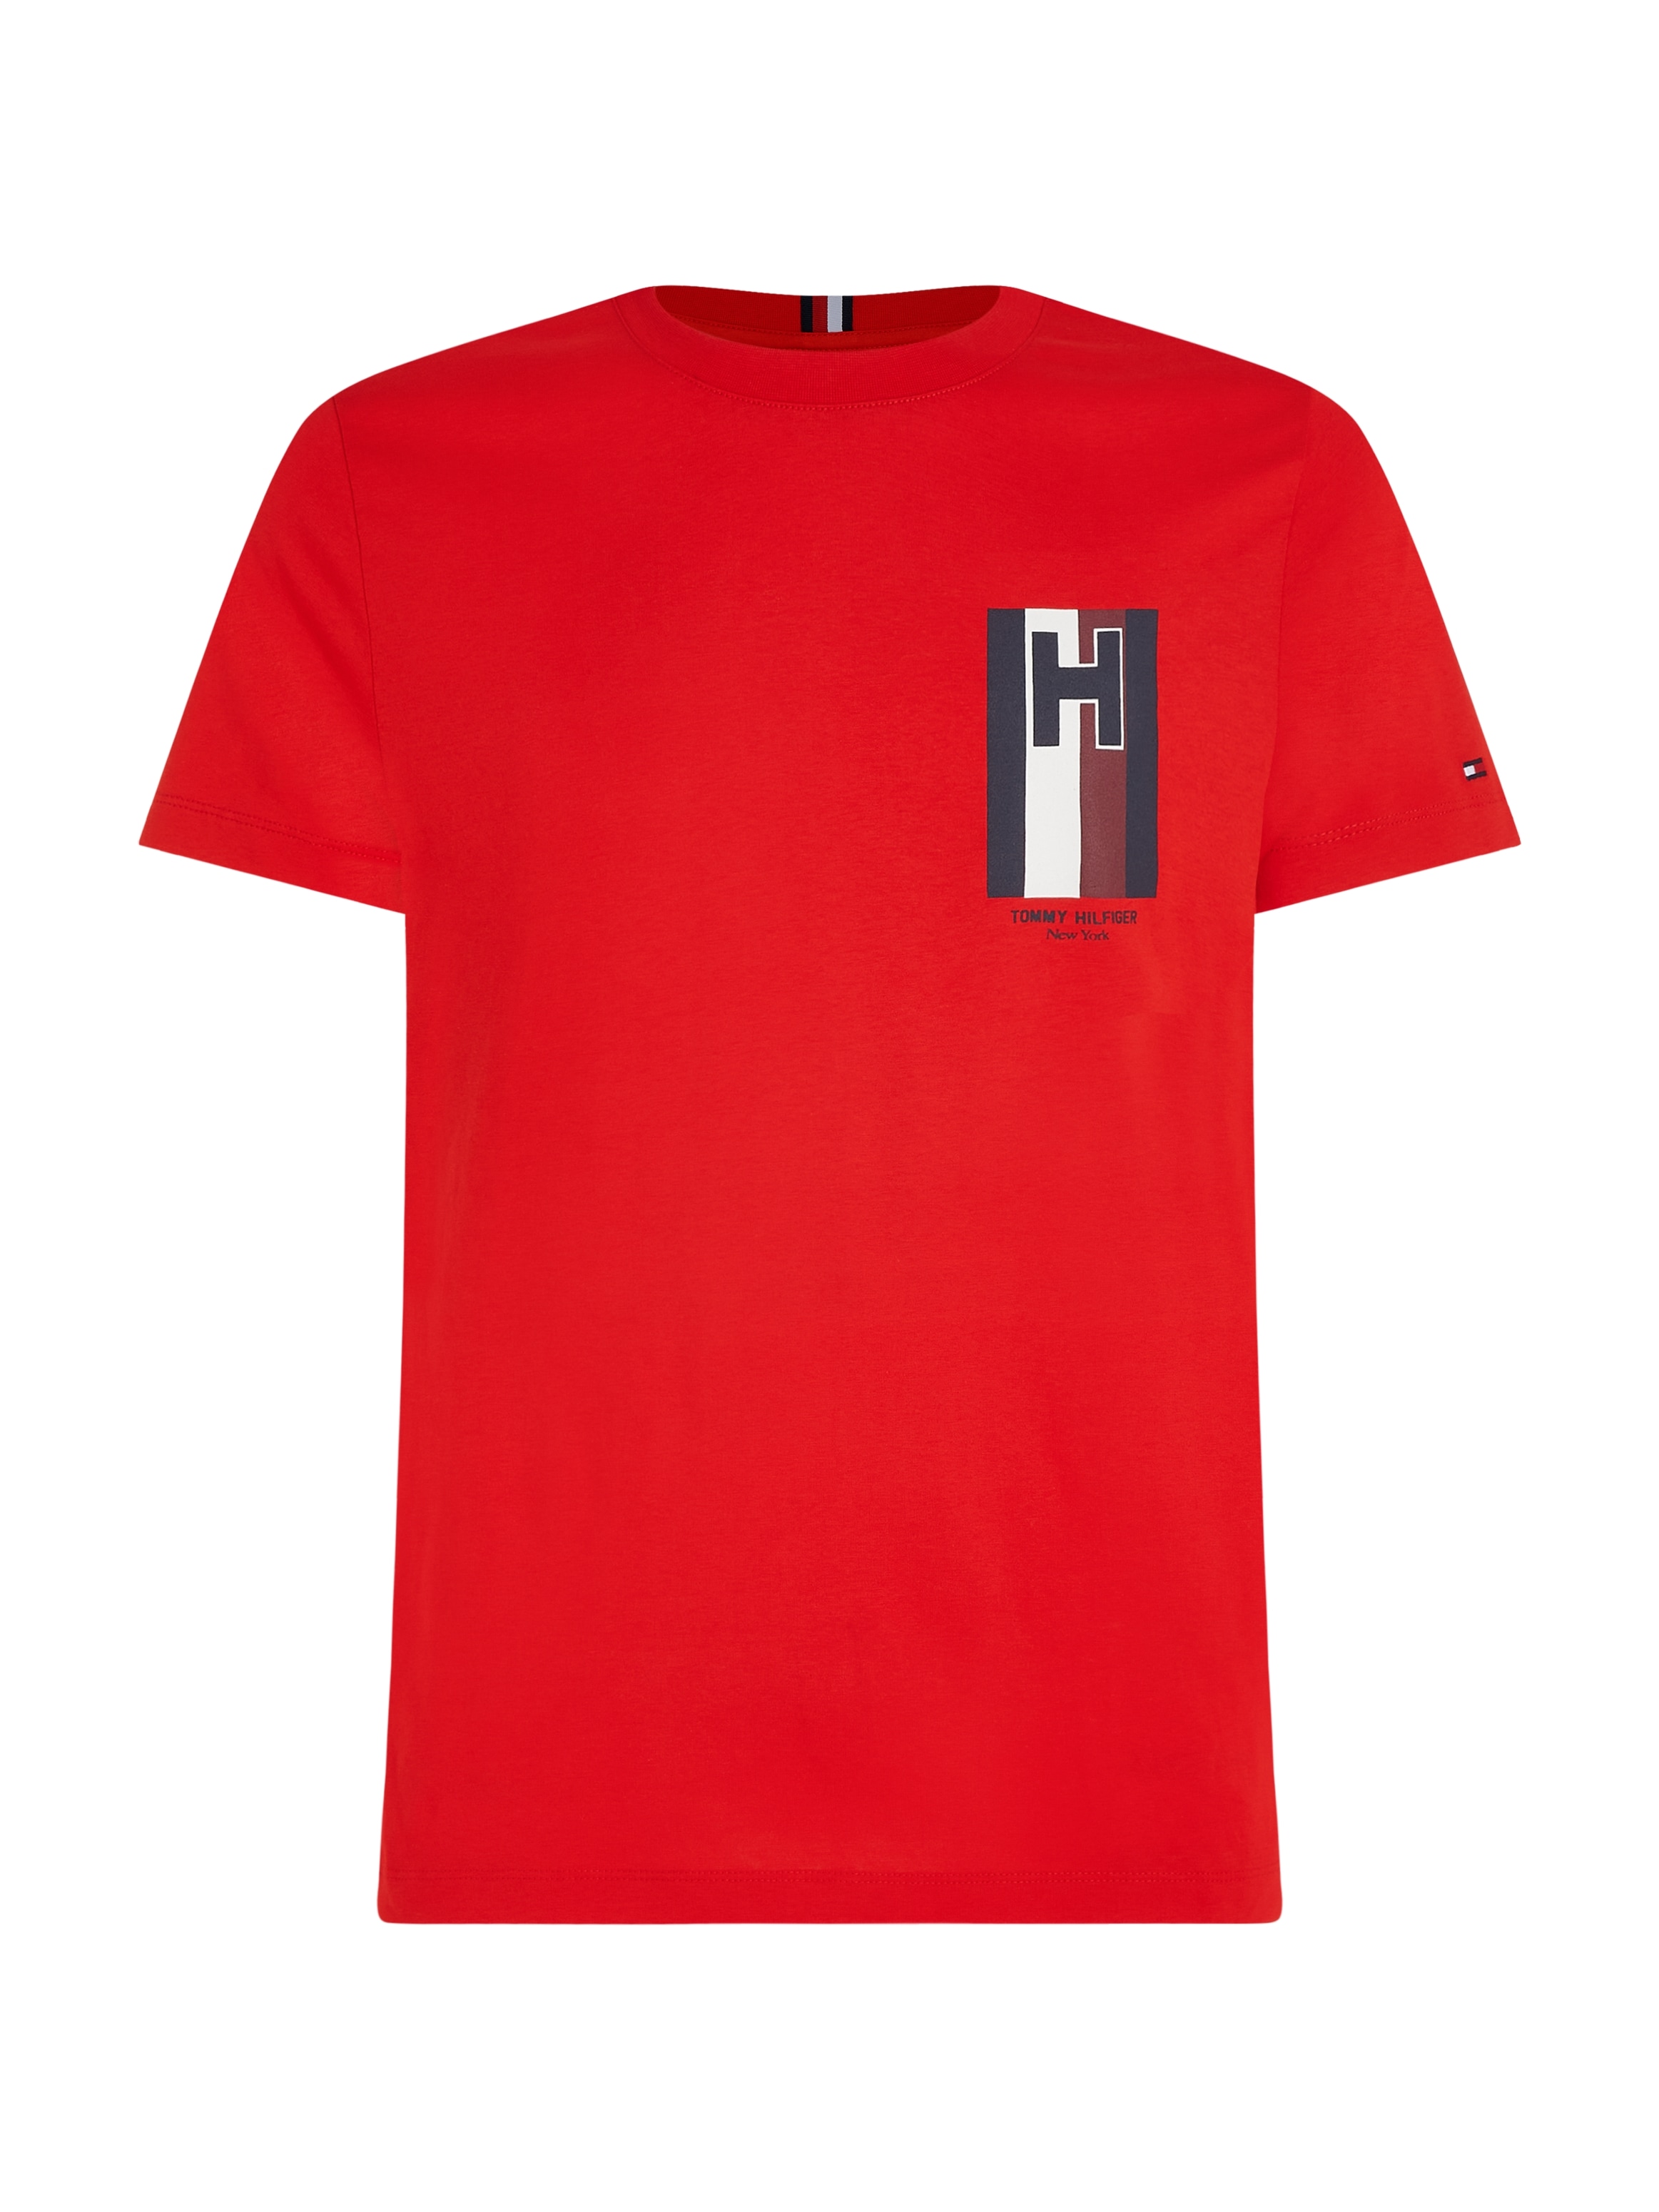 Tommy Hilfiger T-Shirt »H bestellen TEE«, EMBLEM Logo online mit gedrucktem